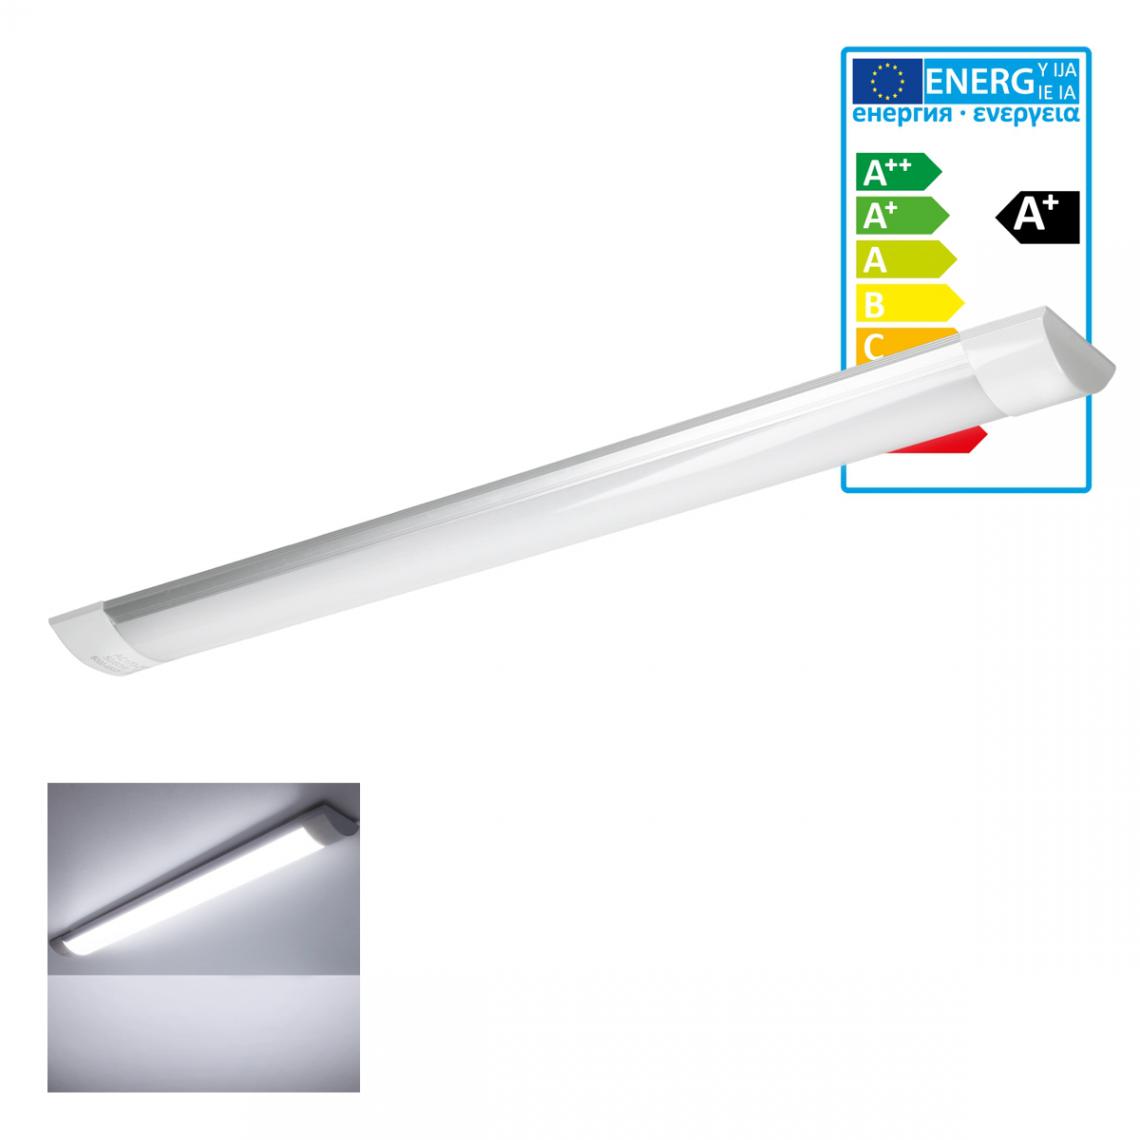 Ecd Germany - Set 10x LED batten tube plafond 18W 60cm blanc froid 220-240V en aluminium - Tubes et néons